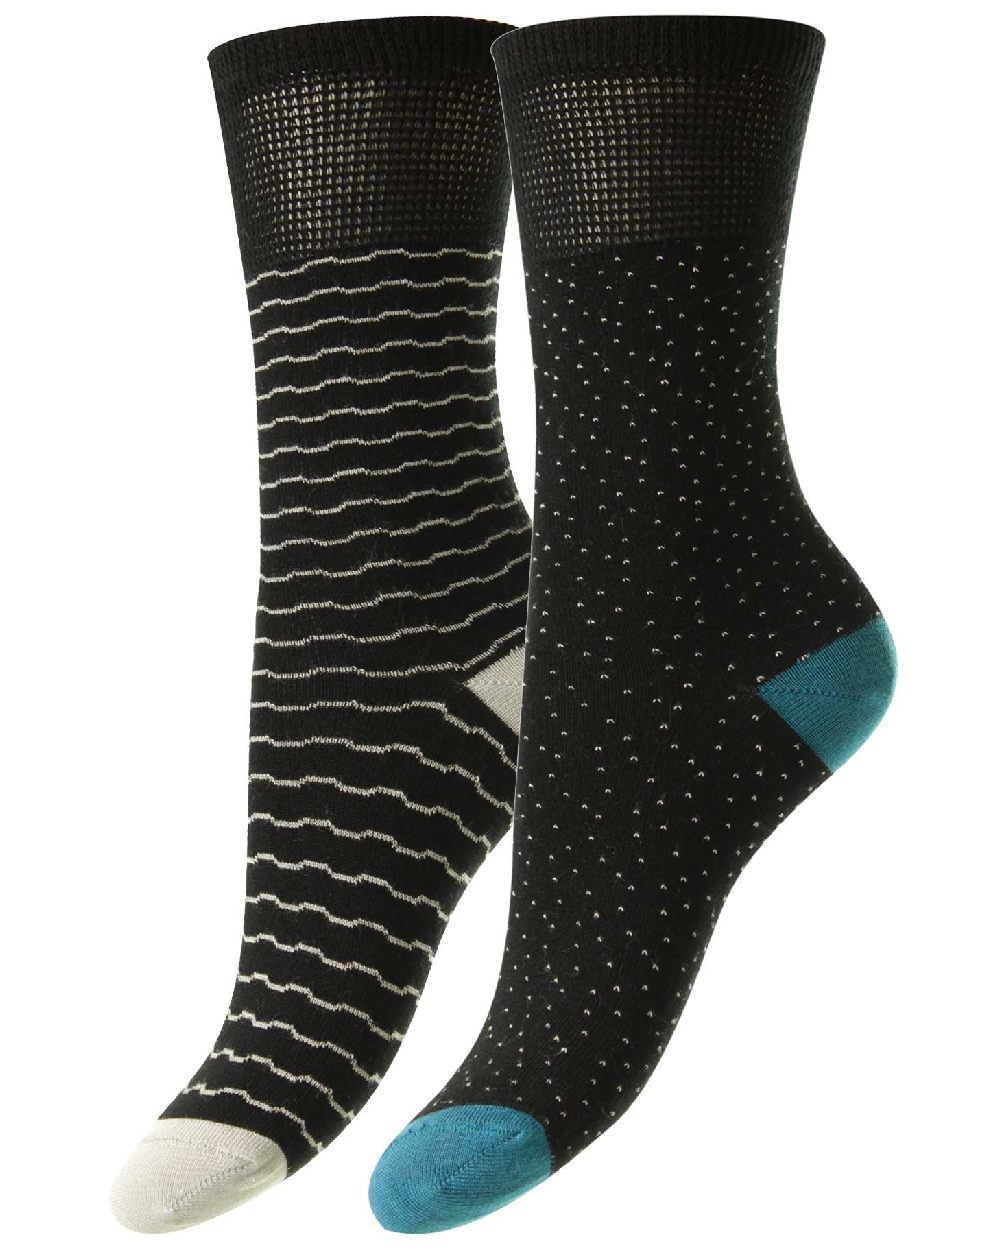 HJ Hall Daisy/Stripe Bamboo Comfort Top Socks | Twin Pack in Black 